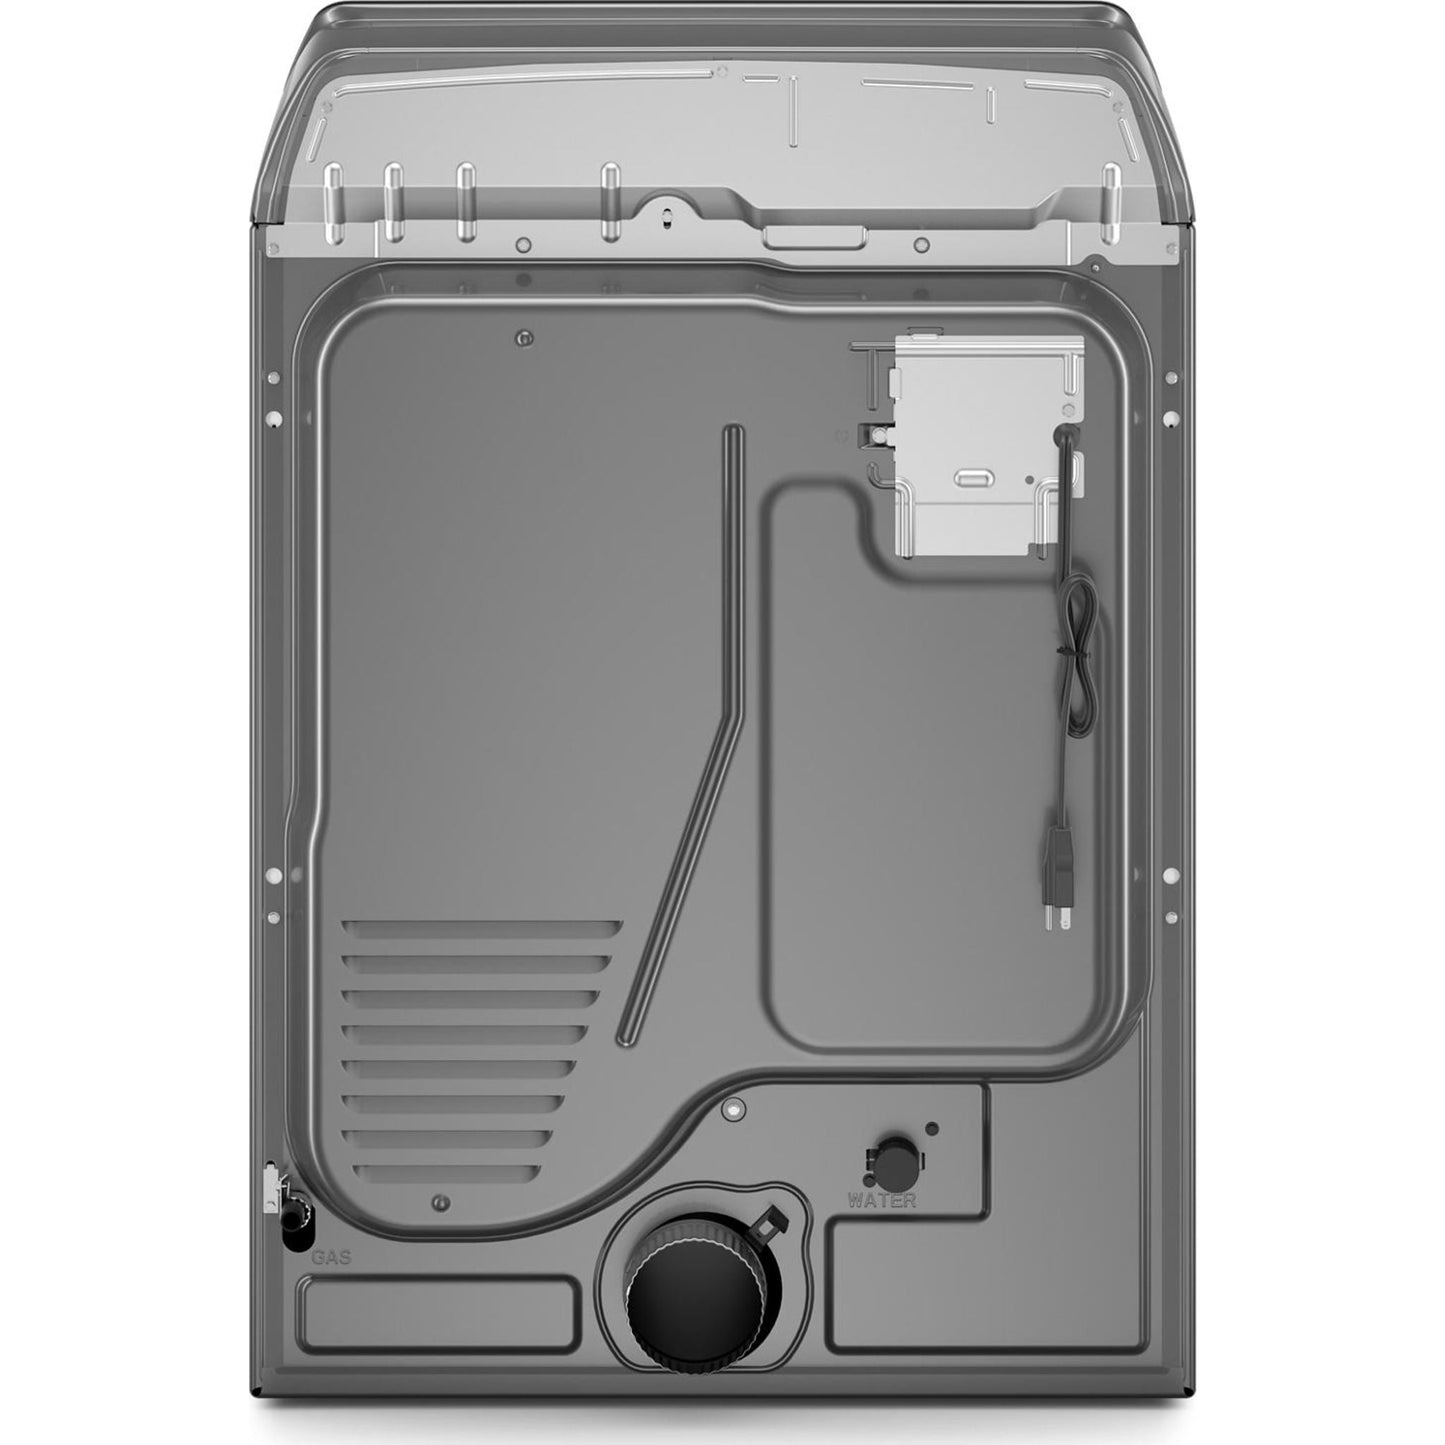 Whirlpool Gas Dryer (WGD6120HC) - Chrome Shadow